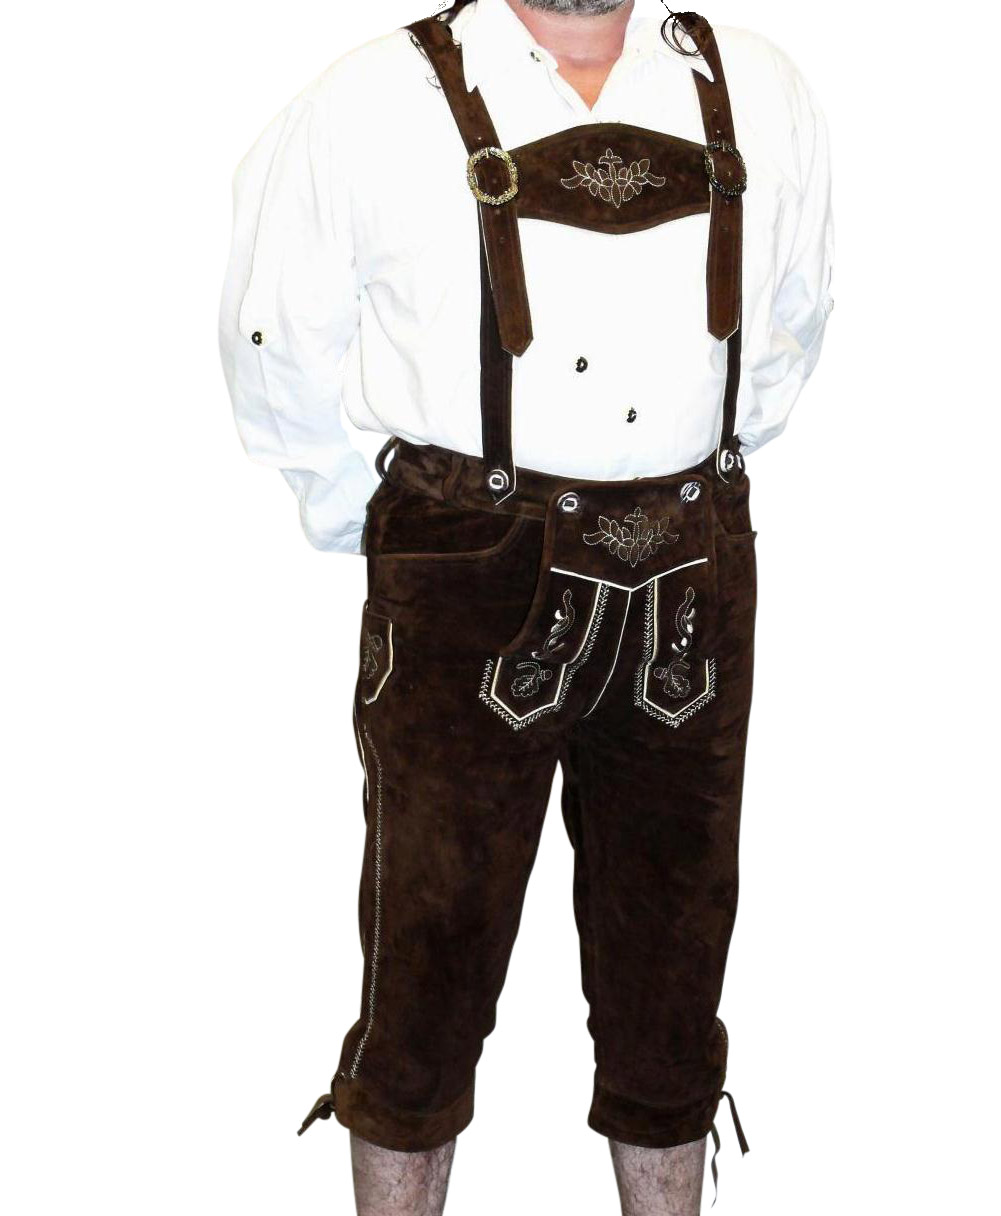 Yiwa Mens Classics Plaid Oktoberfest Shirt and Lederhosen for German Bavarian